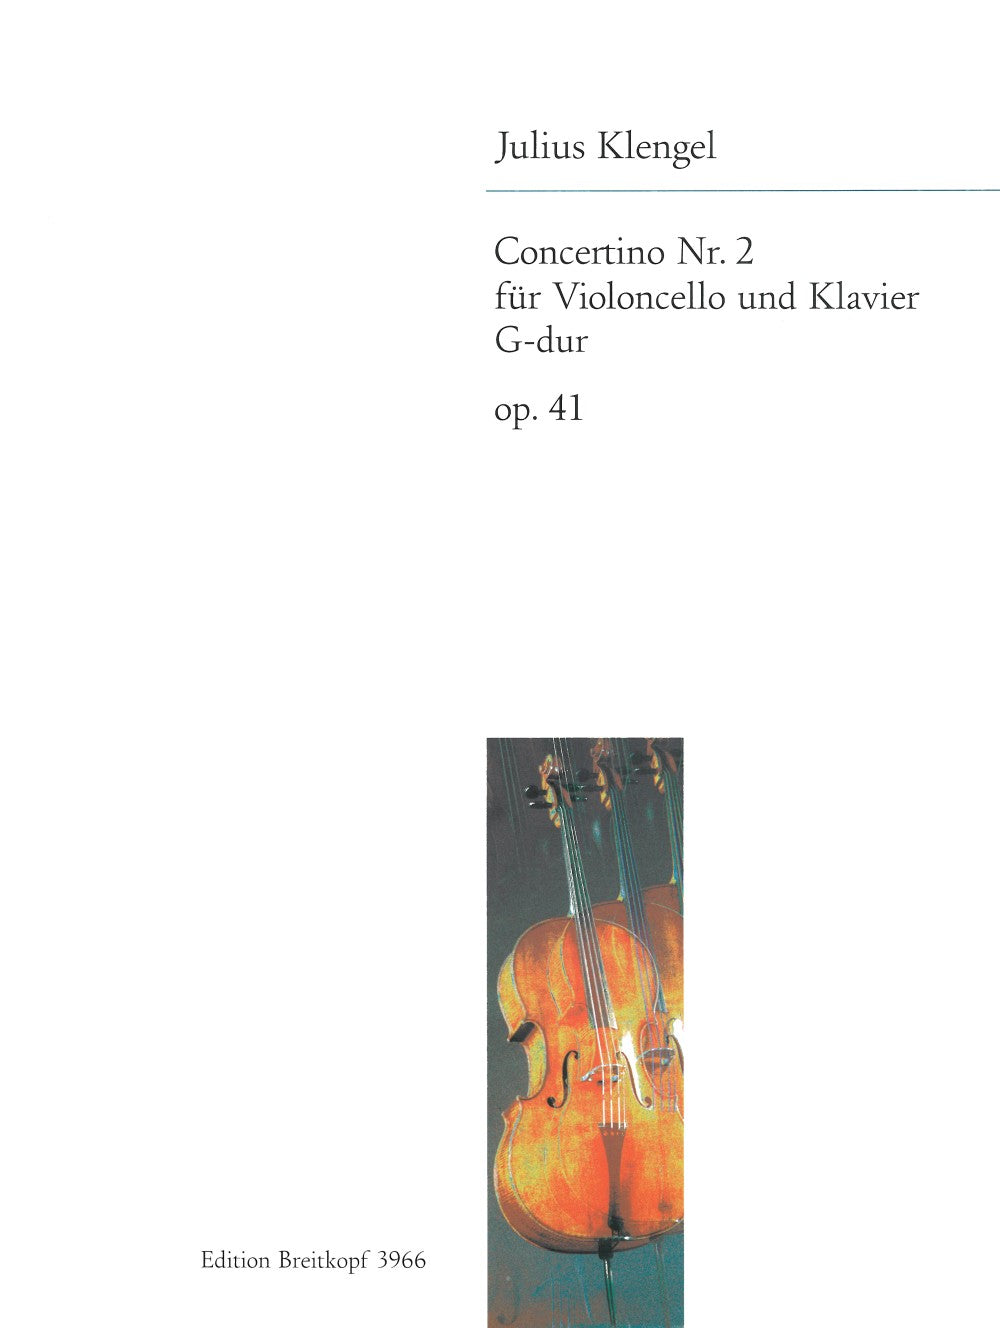 Klengel: Cello Concertino No. 2 in G Major, Op. 41